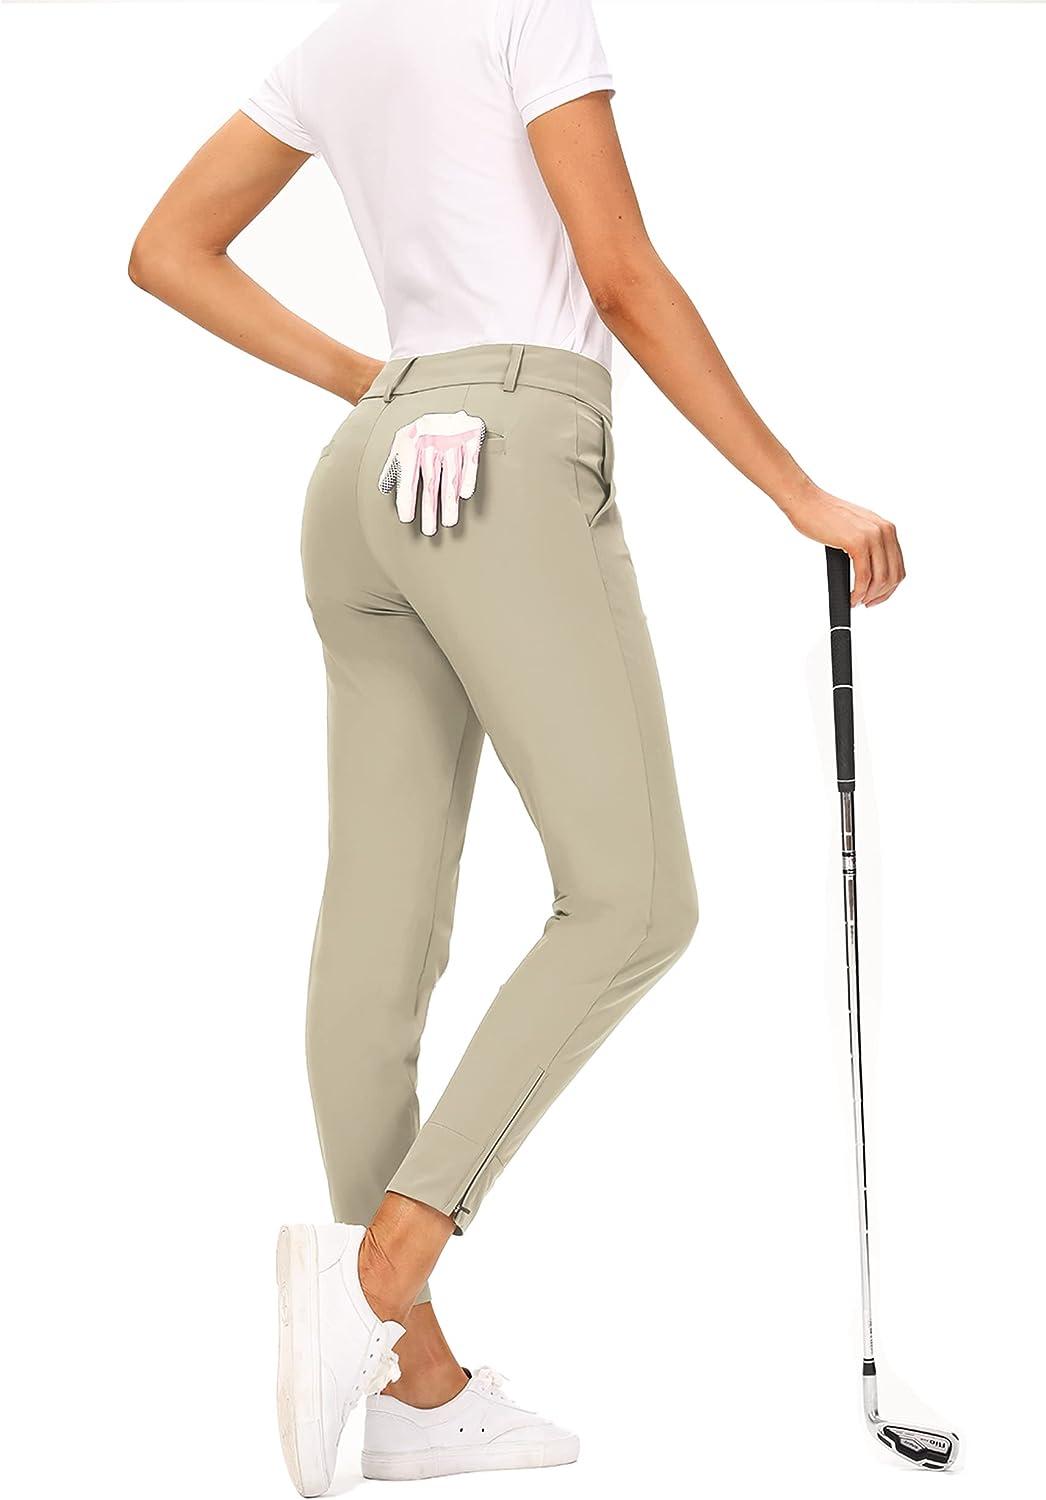 Hiverlay Womens pro Golf Pants Quick Dry Slim Lightweight Work